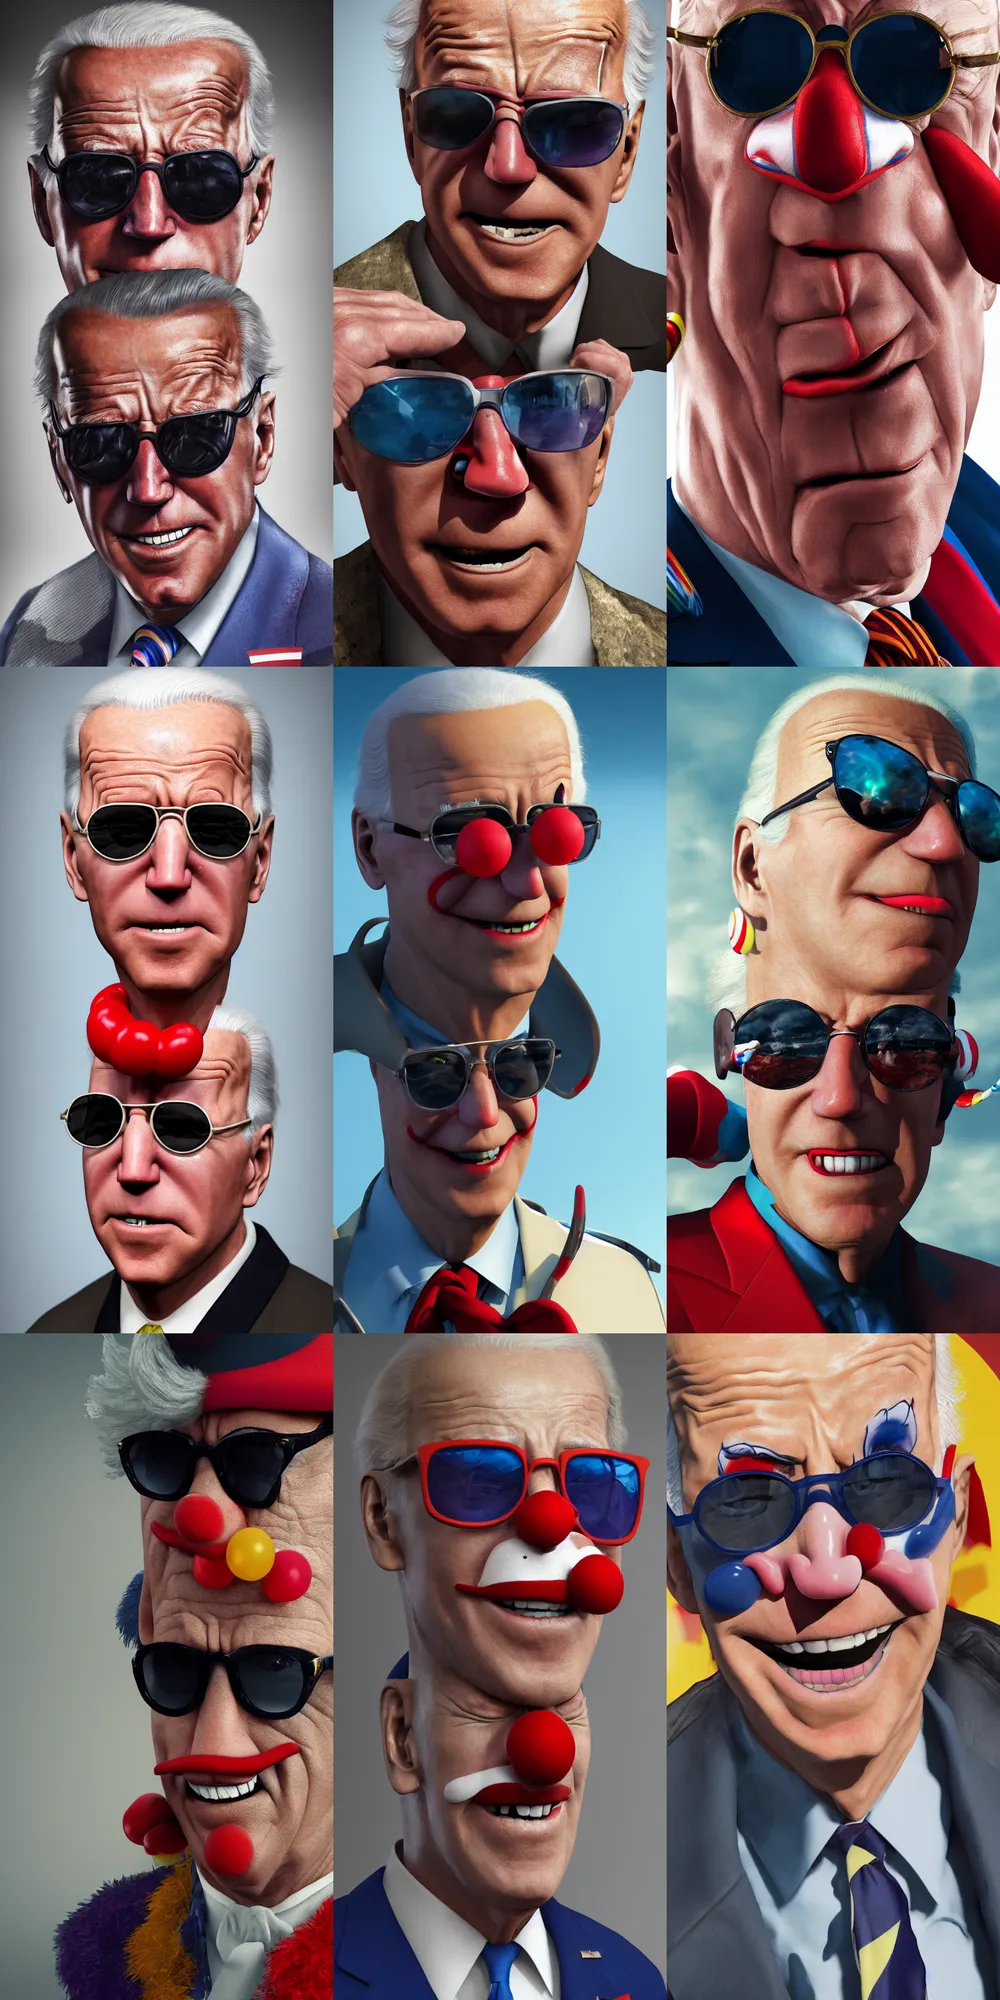 Prompt: a photorealistic portrait of Joe Biden wearing sunglasses, as an adventurer, wearing a clown-suit, hopeful, brave, studio lighting, 8k, cgsociety, artstation trending, 3d render, octane render, high detail, high quality, style of Wayne Haag